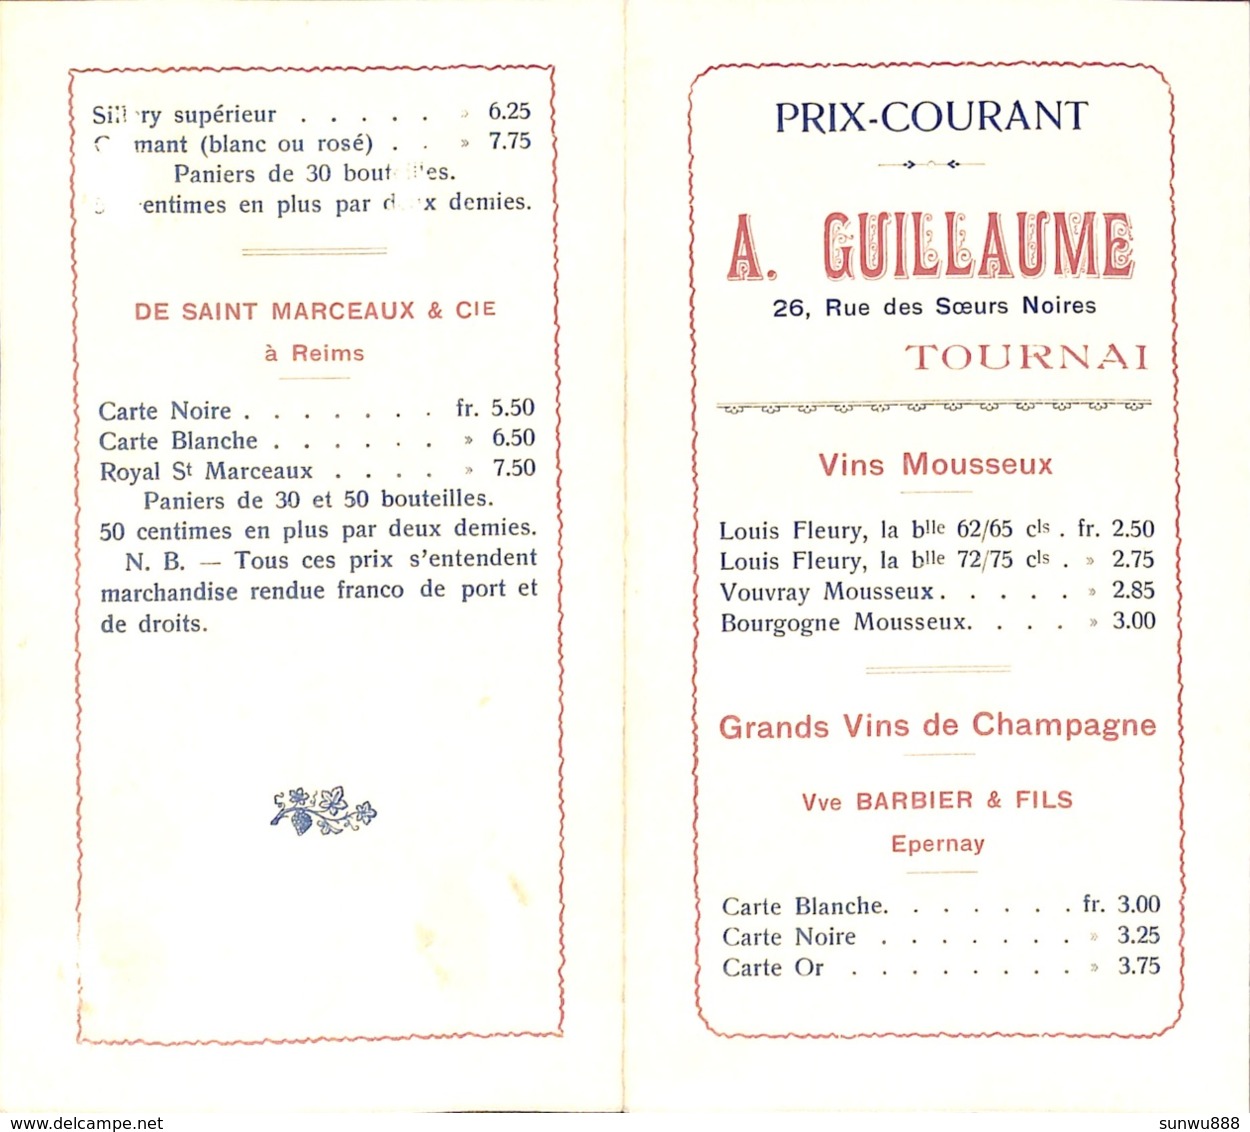 Prix-Courant A. Guillaume Tournai - Vins Mousseux, Champagne Epernay, Crémant... - Alimentare